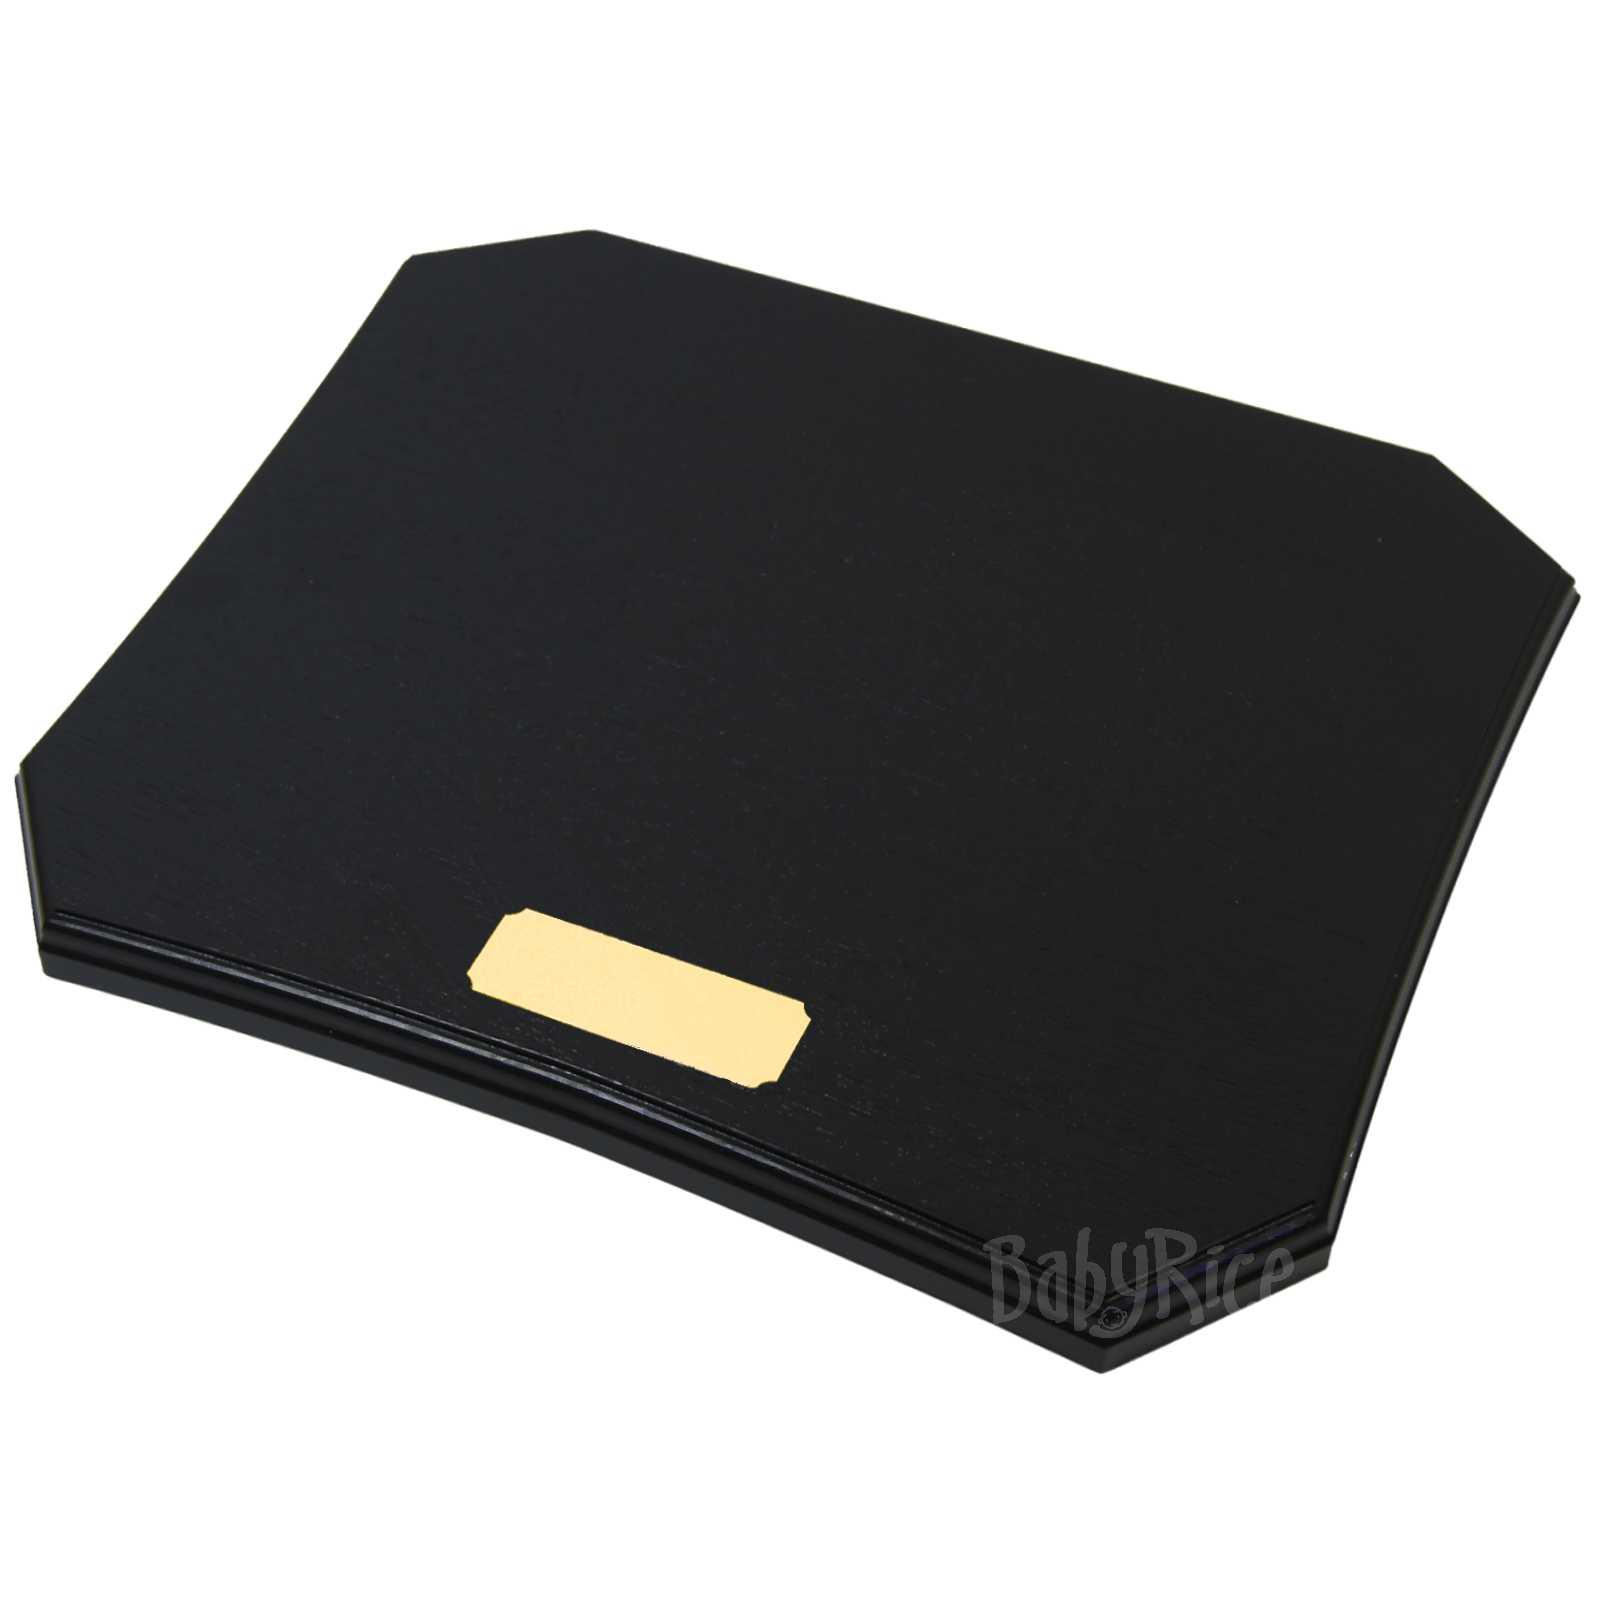 Black Display Plinth, Large 10x12'', 30x75mm Gold Blank Plaque